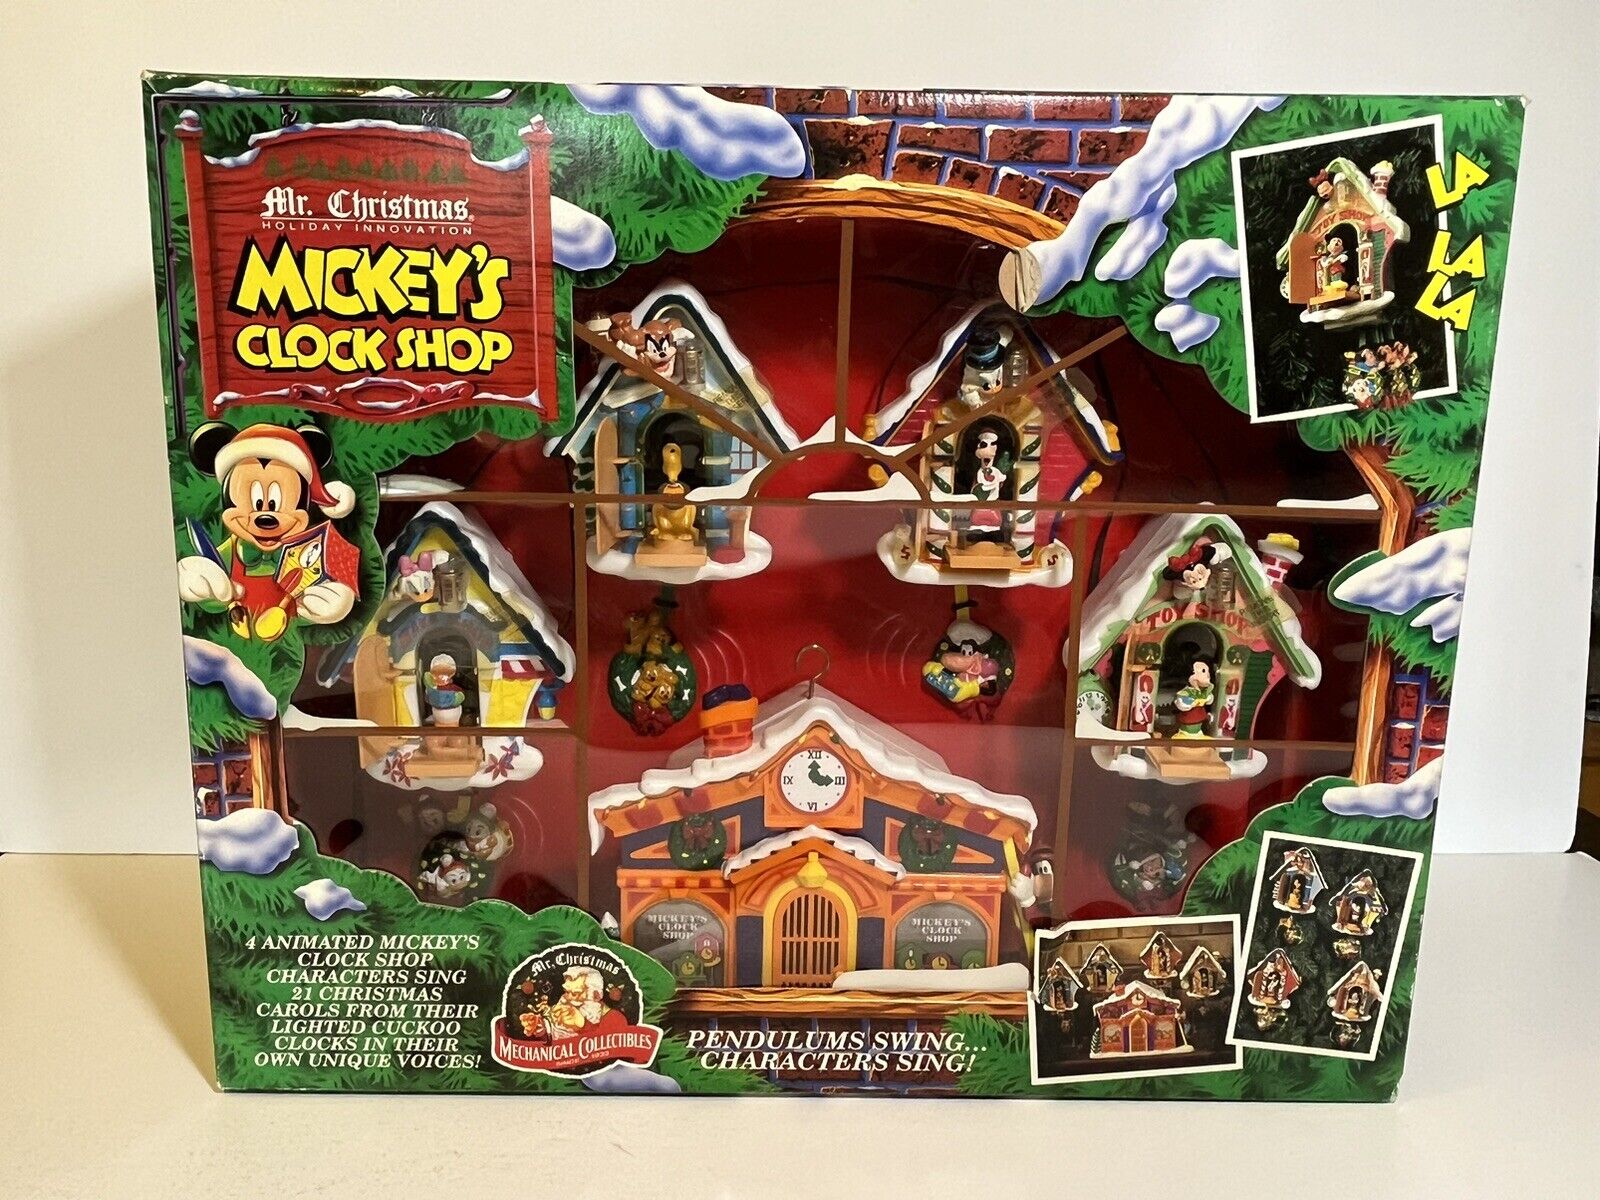 Mr. Christmas 1993 Disney Mickey\'s Clock Shop In Original Box - NEW